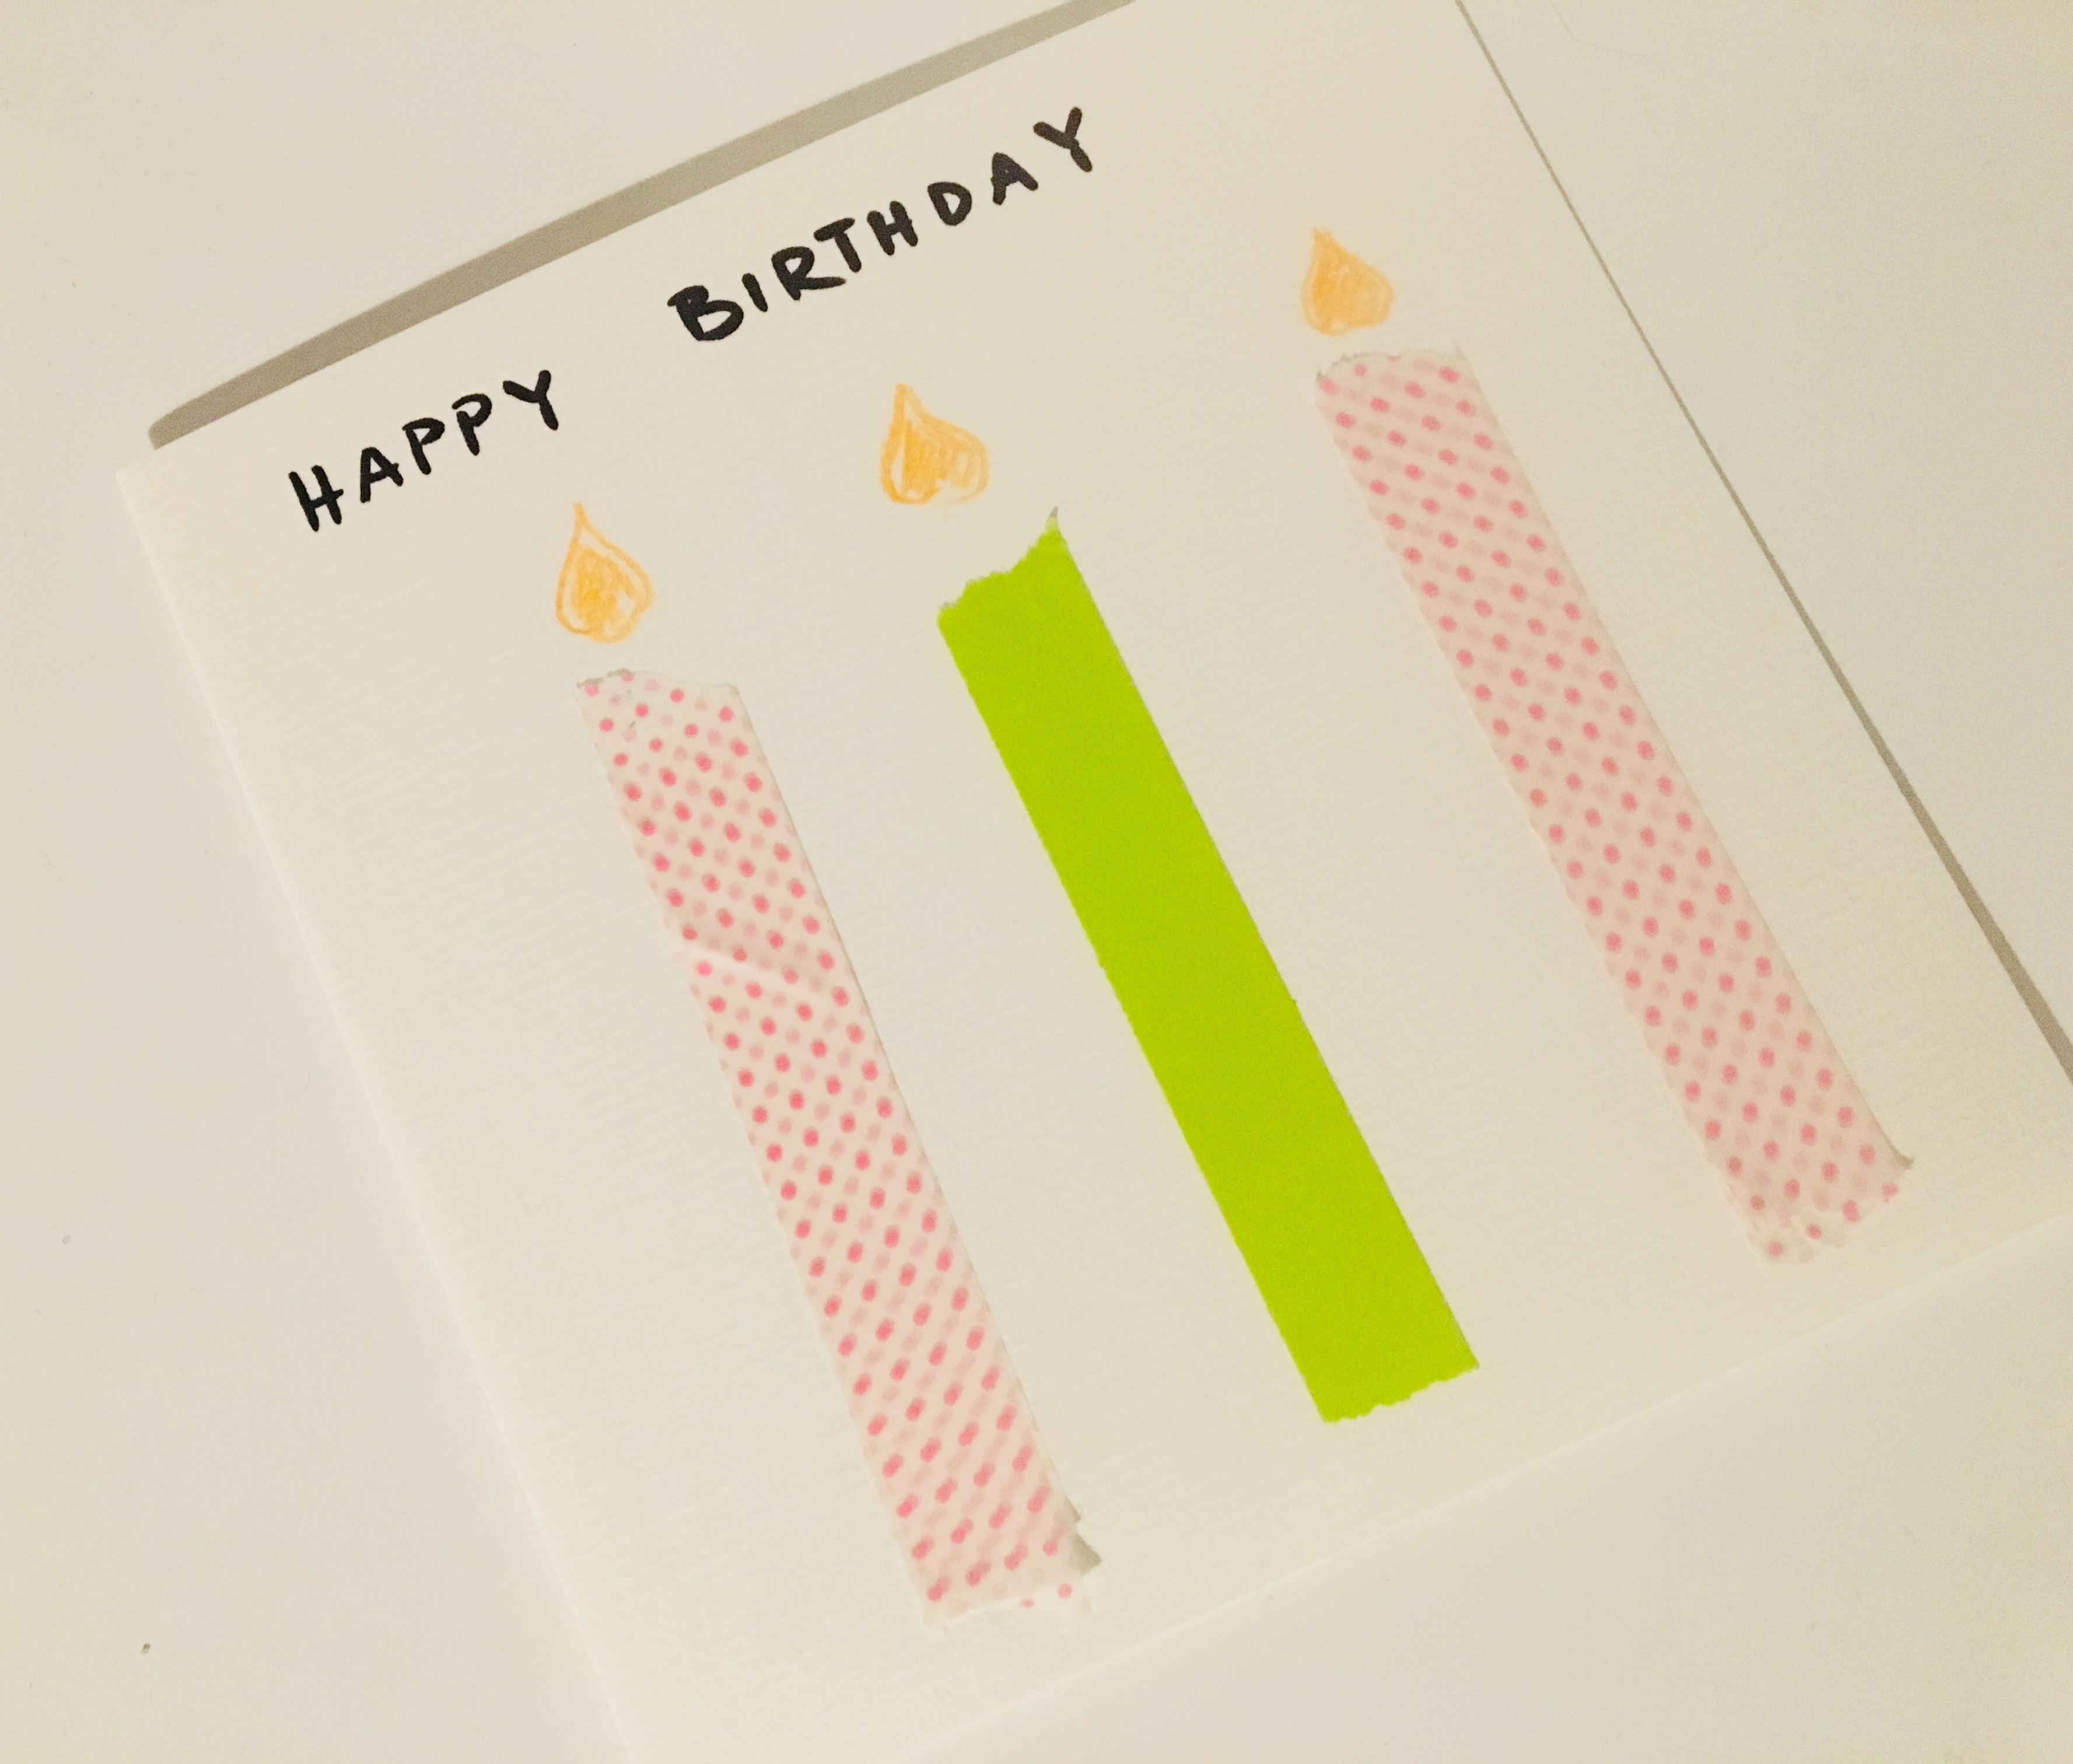 Diy Geburtstagskarten 3 Einfache Ideen Zum Selber Basteln Blog Geschenkidee Chblog Geschenkidee Ch